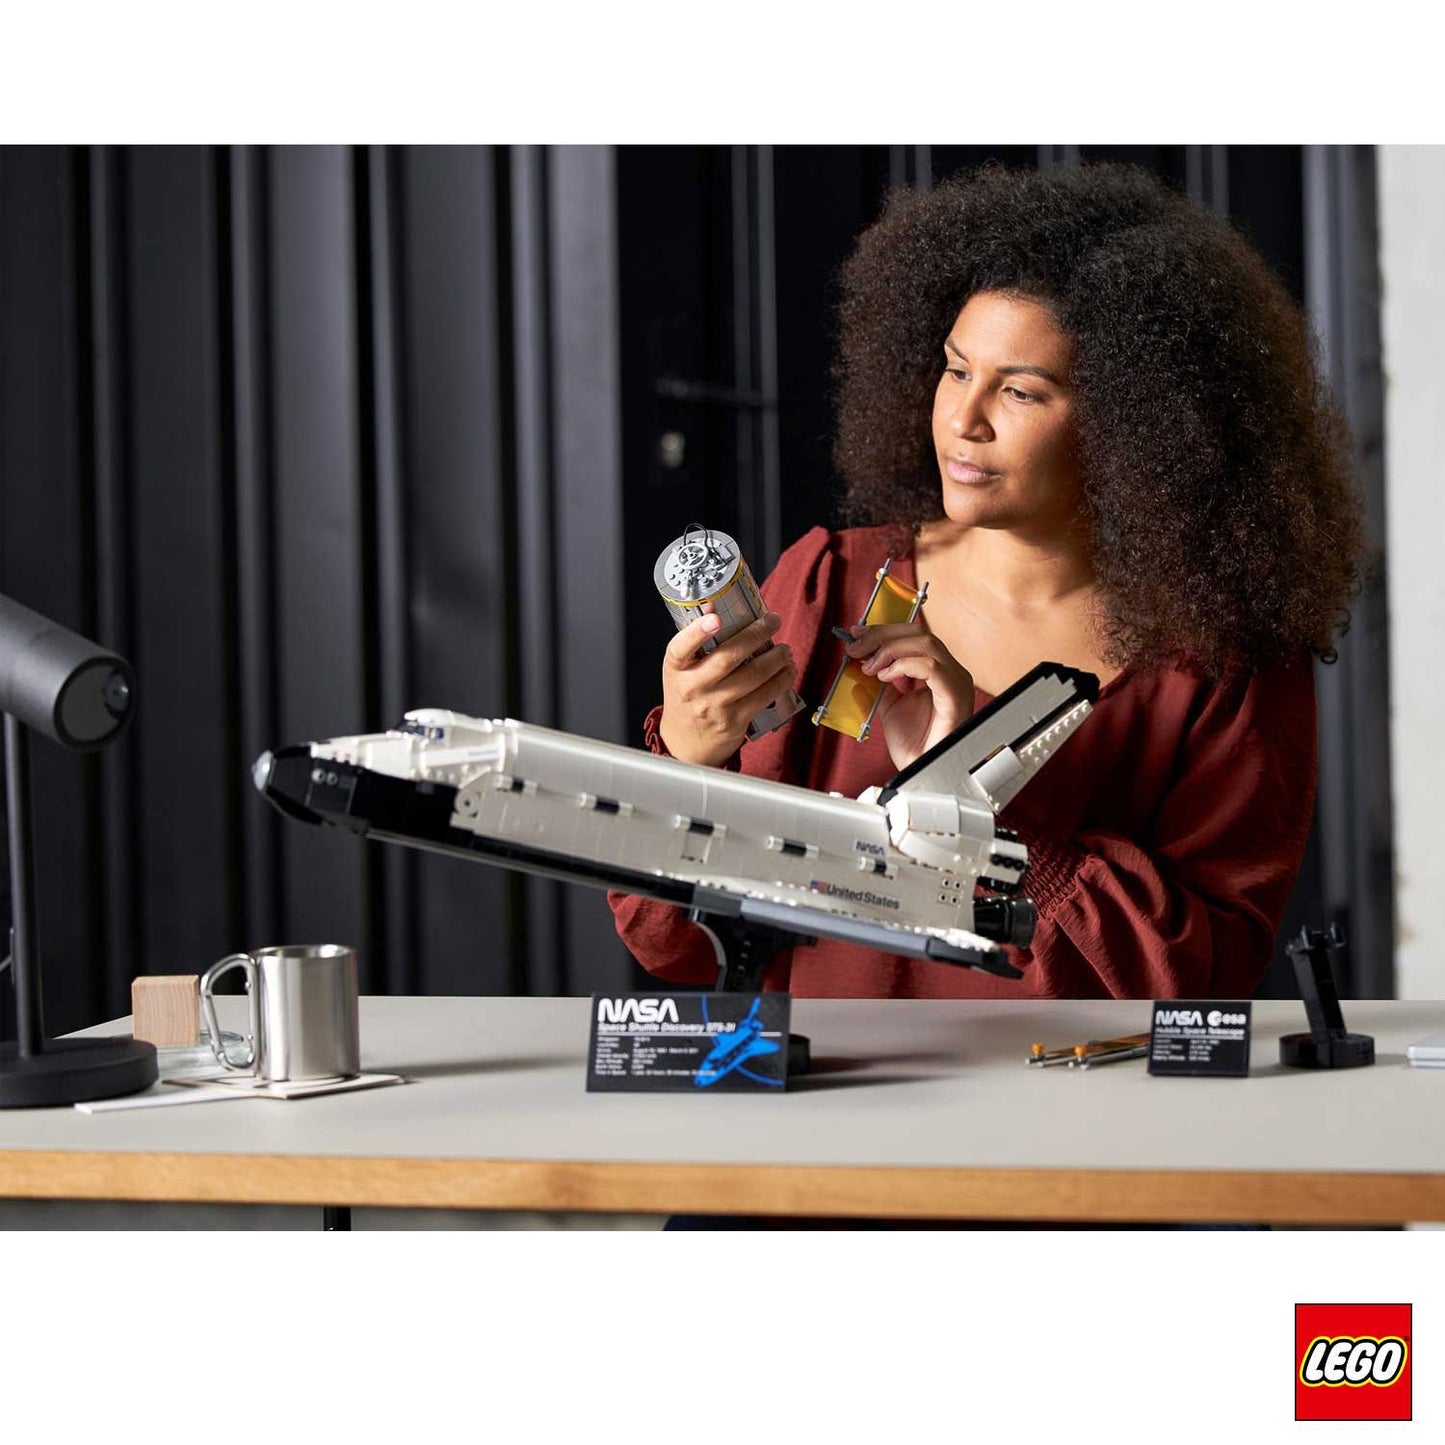 Lego – Creator® Expert NASA Space Shuttle Discovery 10283